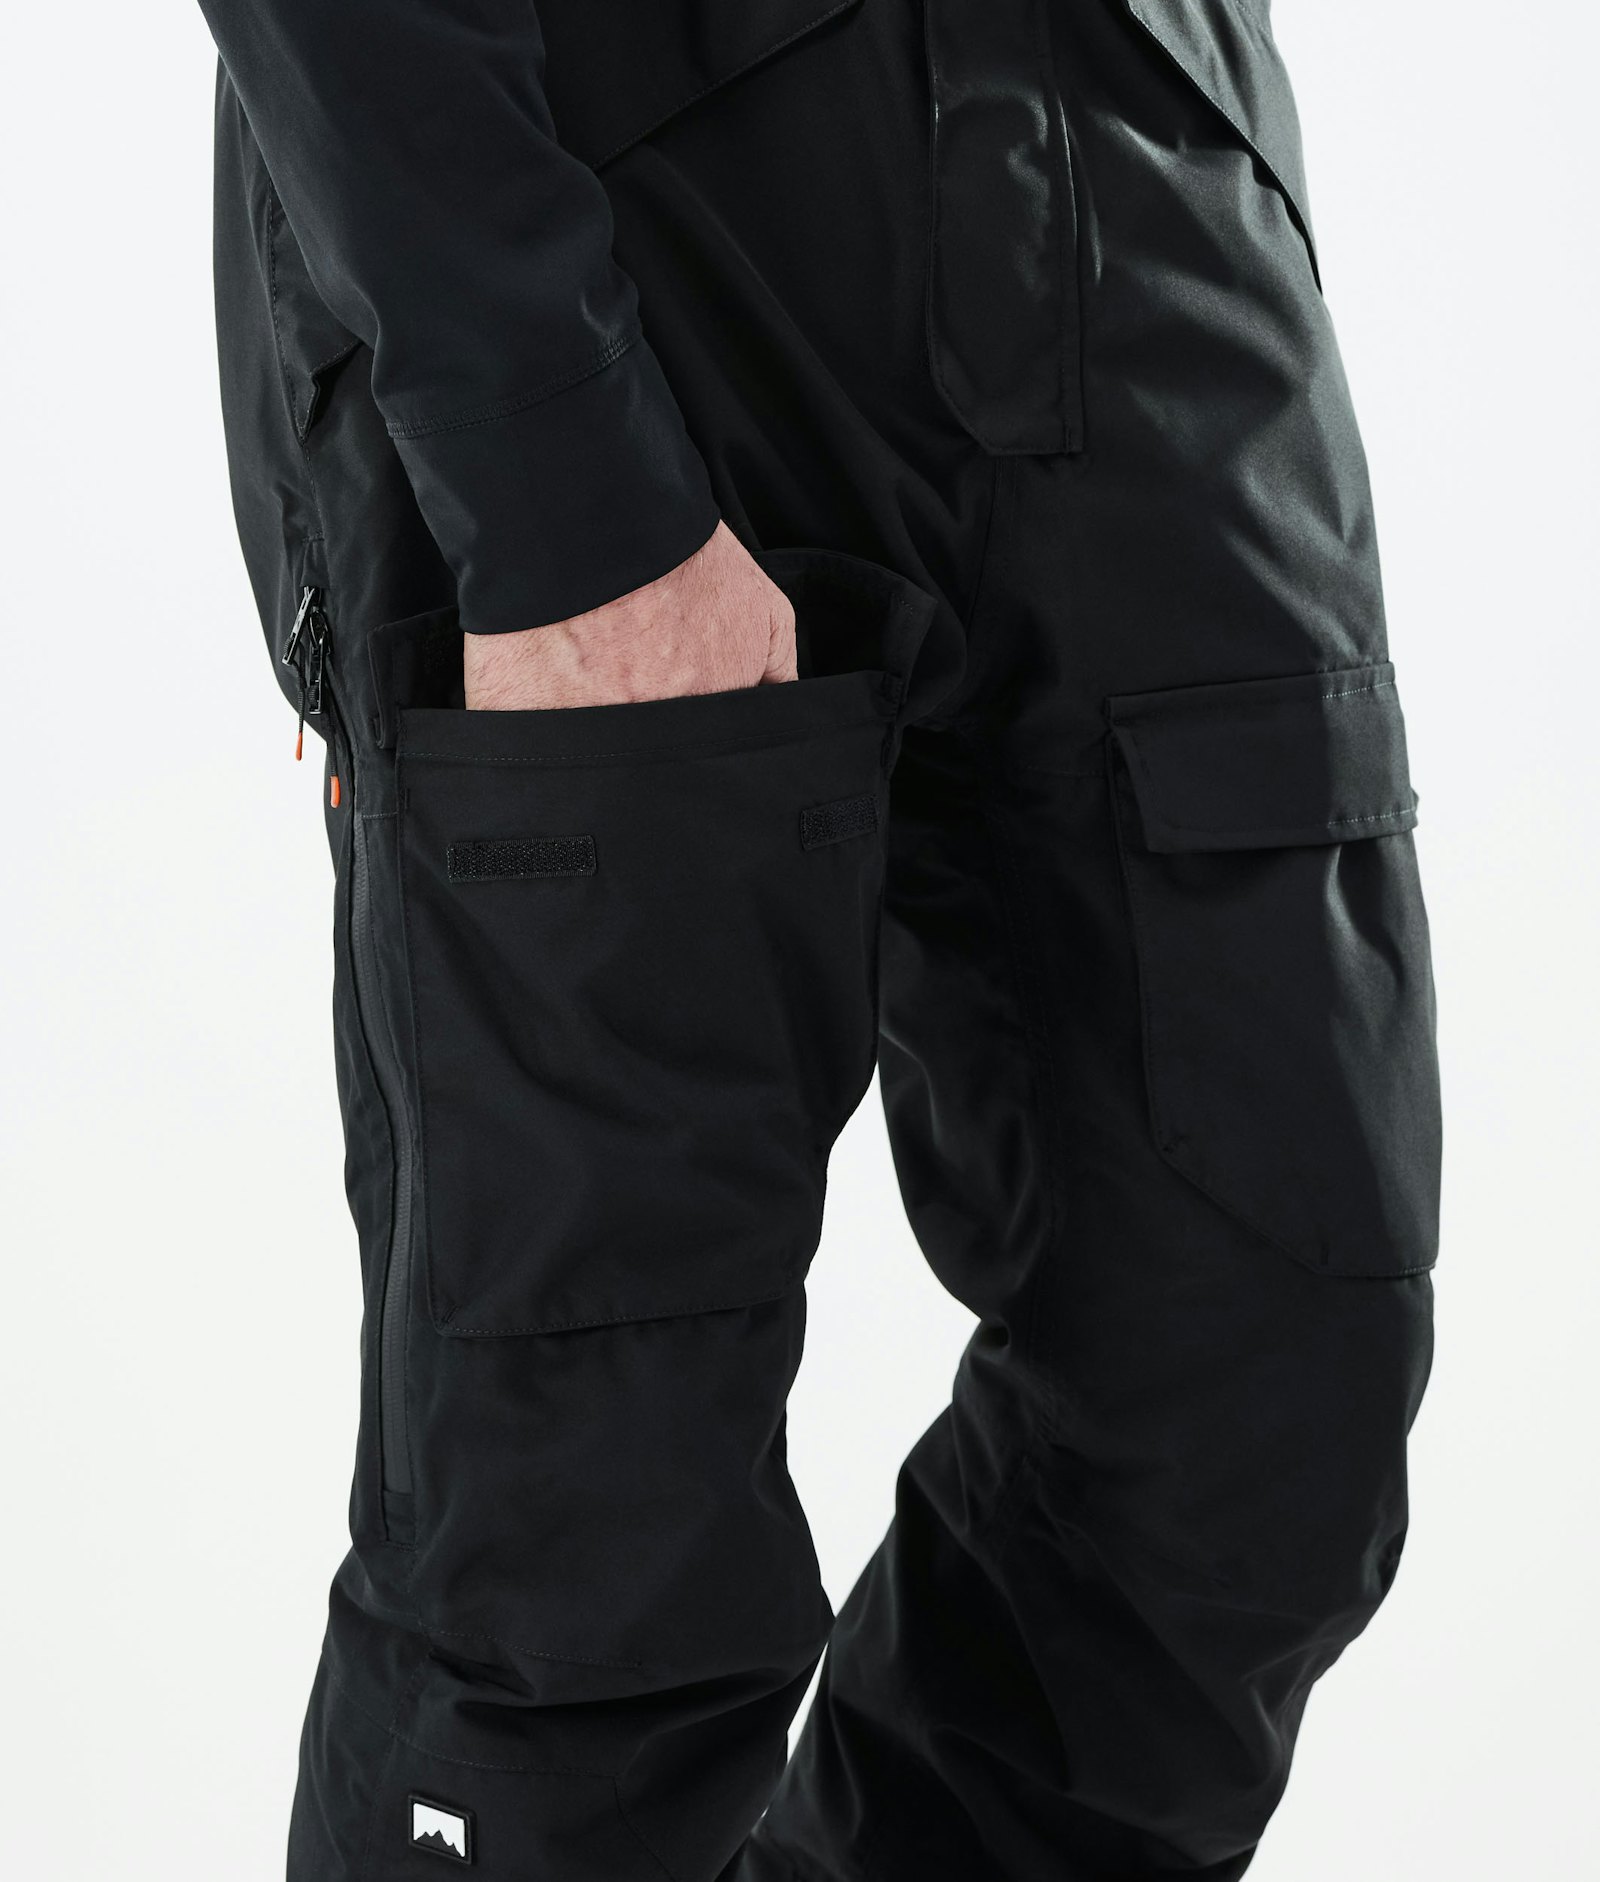 Fawk 2021 Ski Pants Men Black, Image 6 of 6